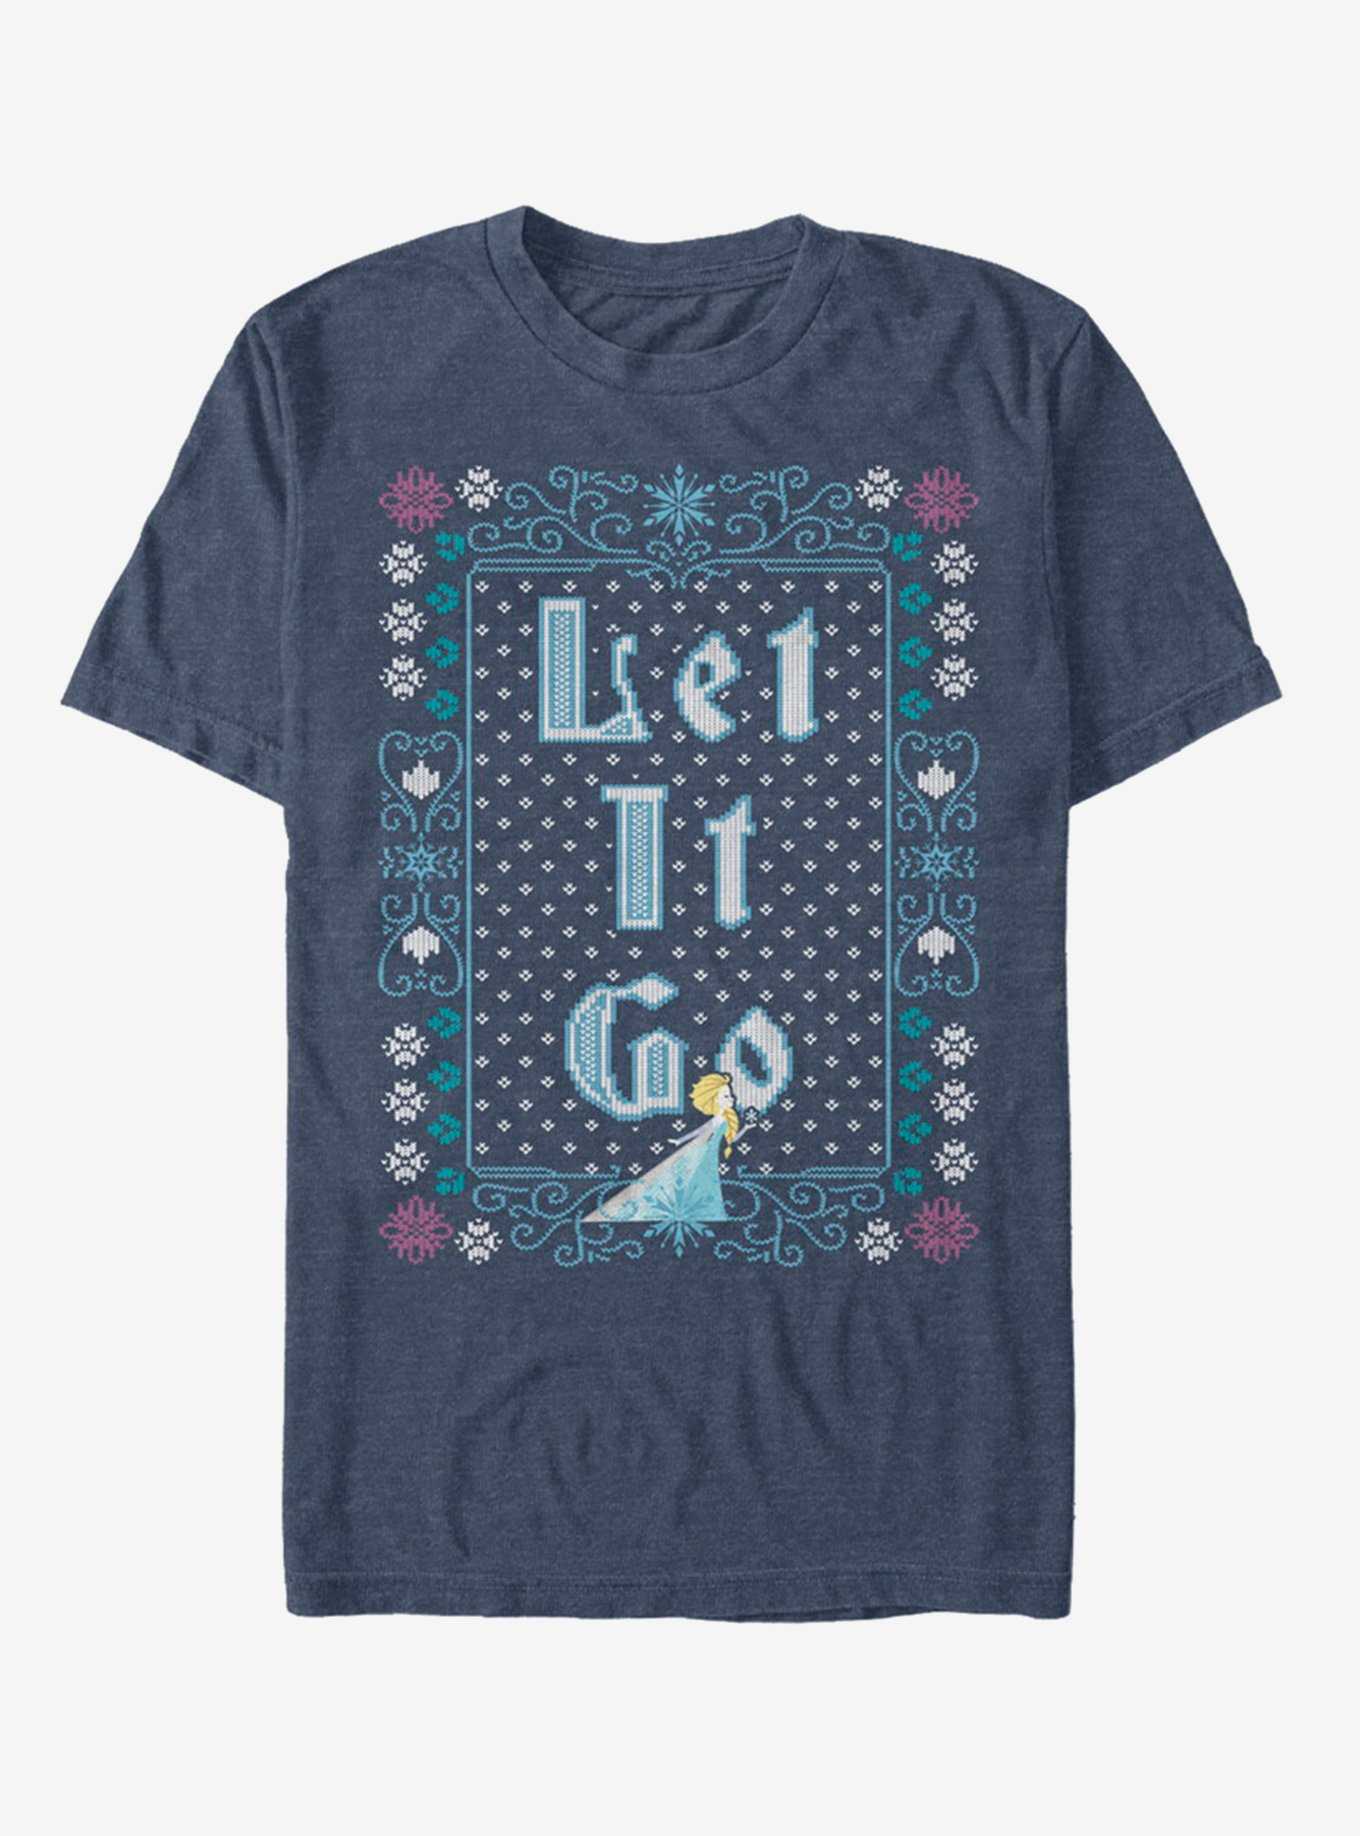 Disney Frozen Let It Go Ugly Sweater T-Shirt, , hi-res